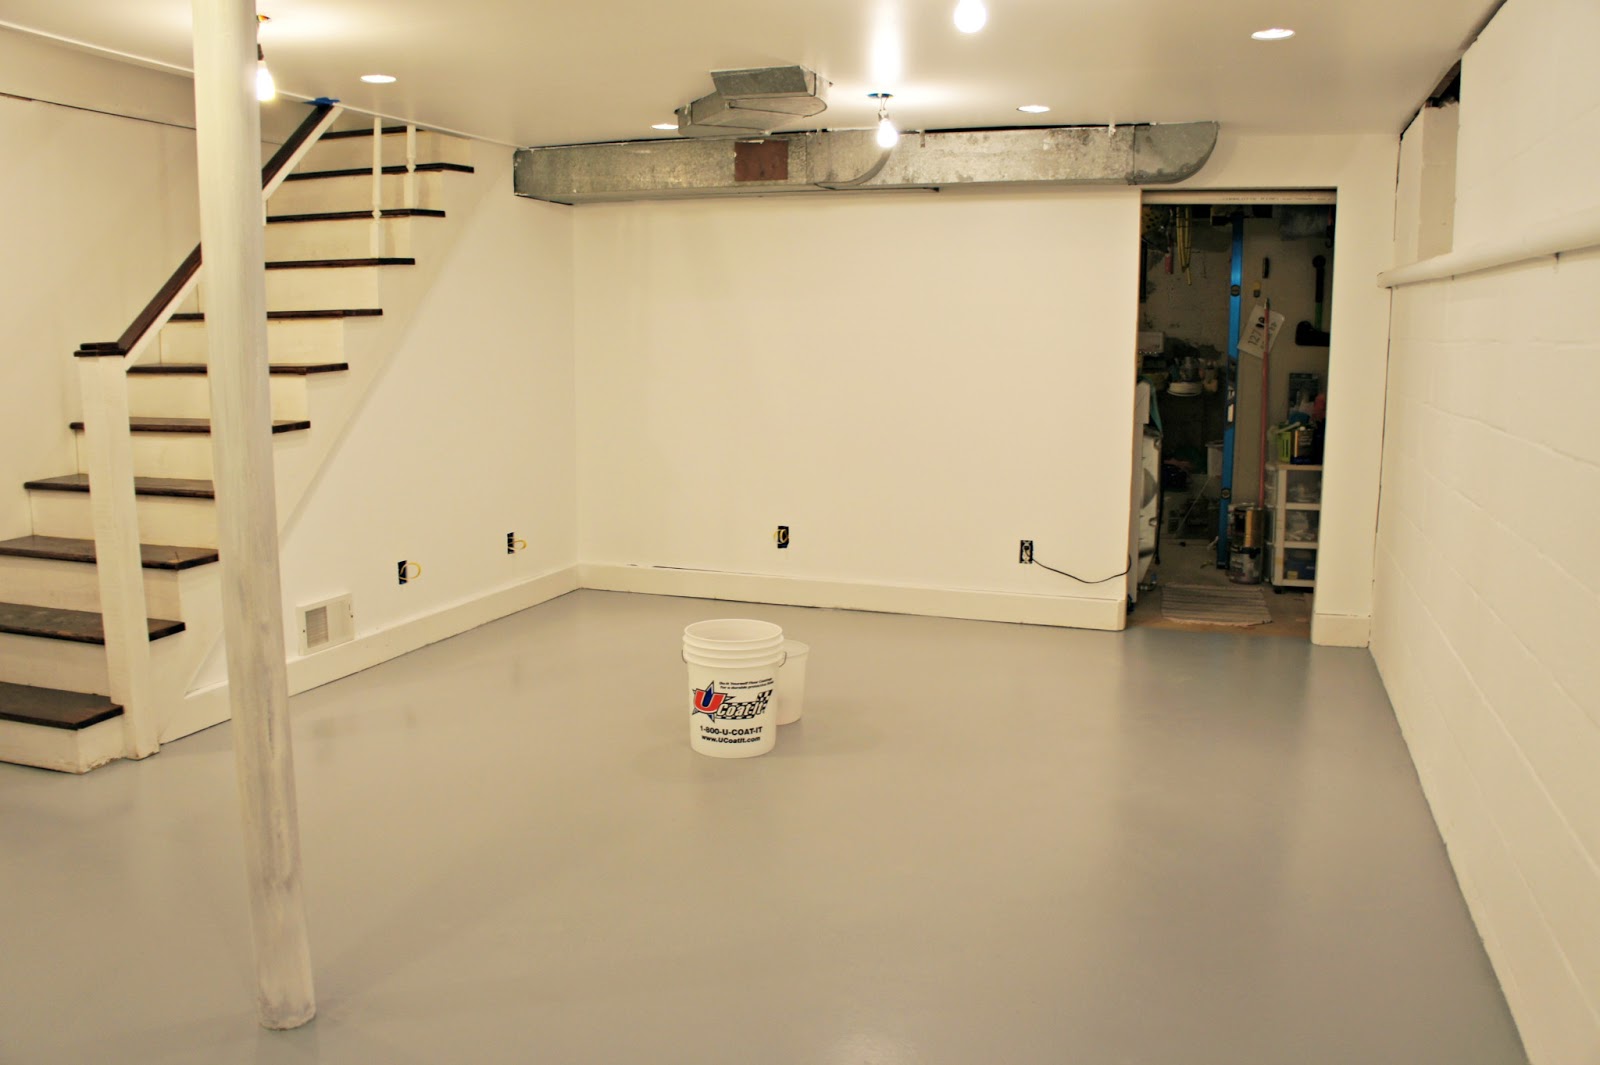 Basement Paint Using White Basement Paint Colors Design Using Minimalist Interior Combined With Concrete Floor Design Ideas For Inspiration Basement Basement Paint Colors For Soothing Purpose